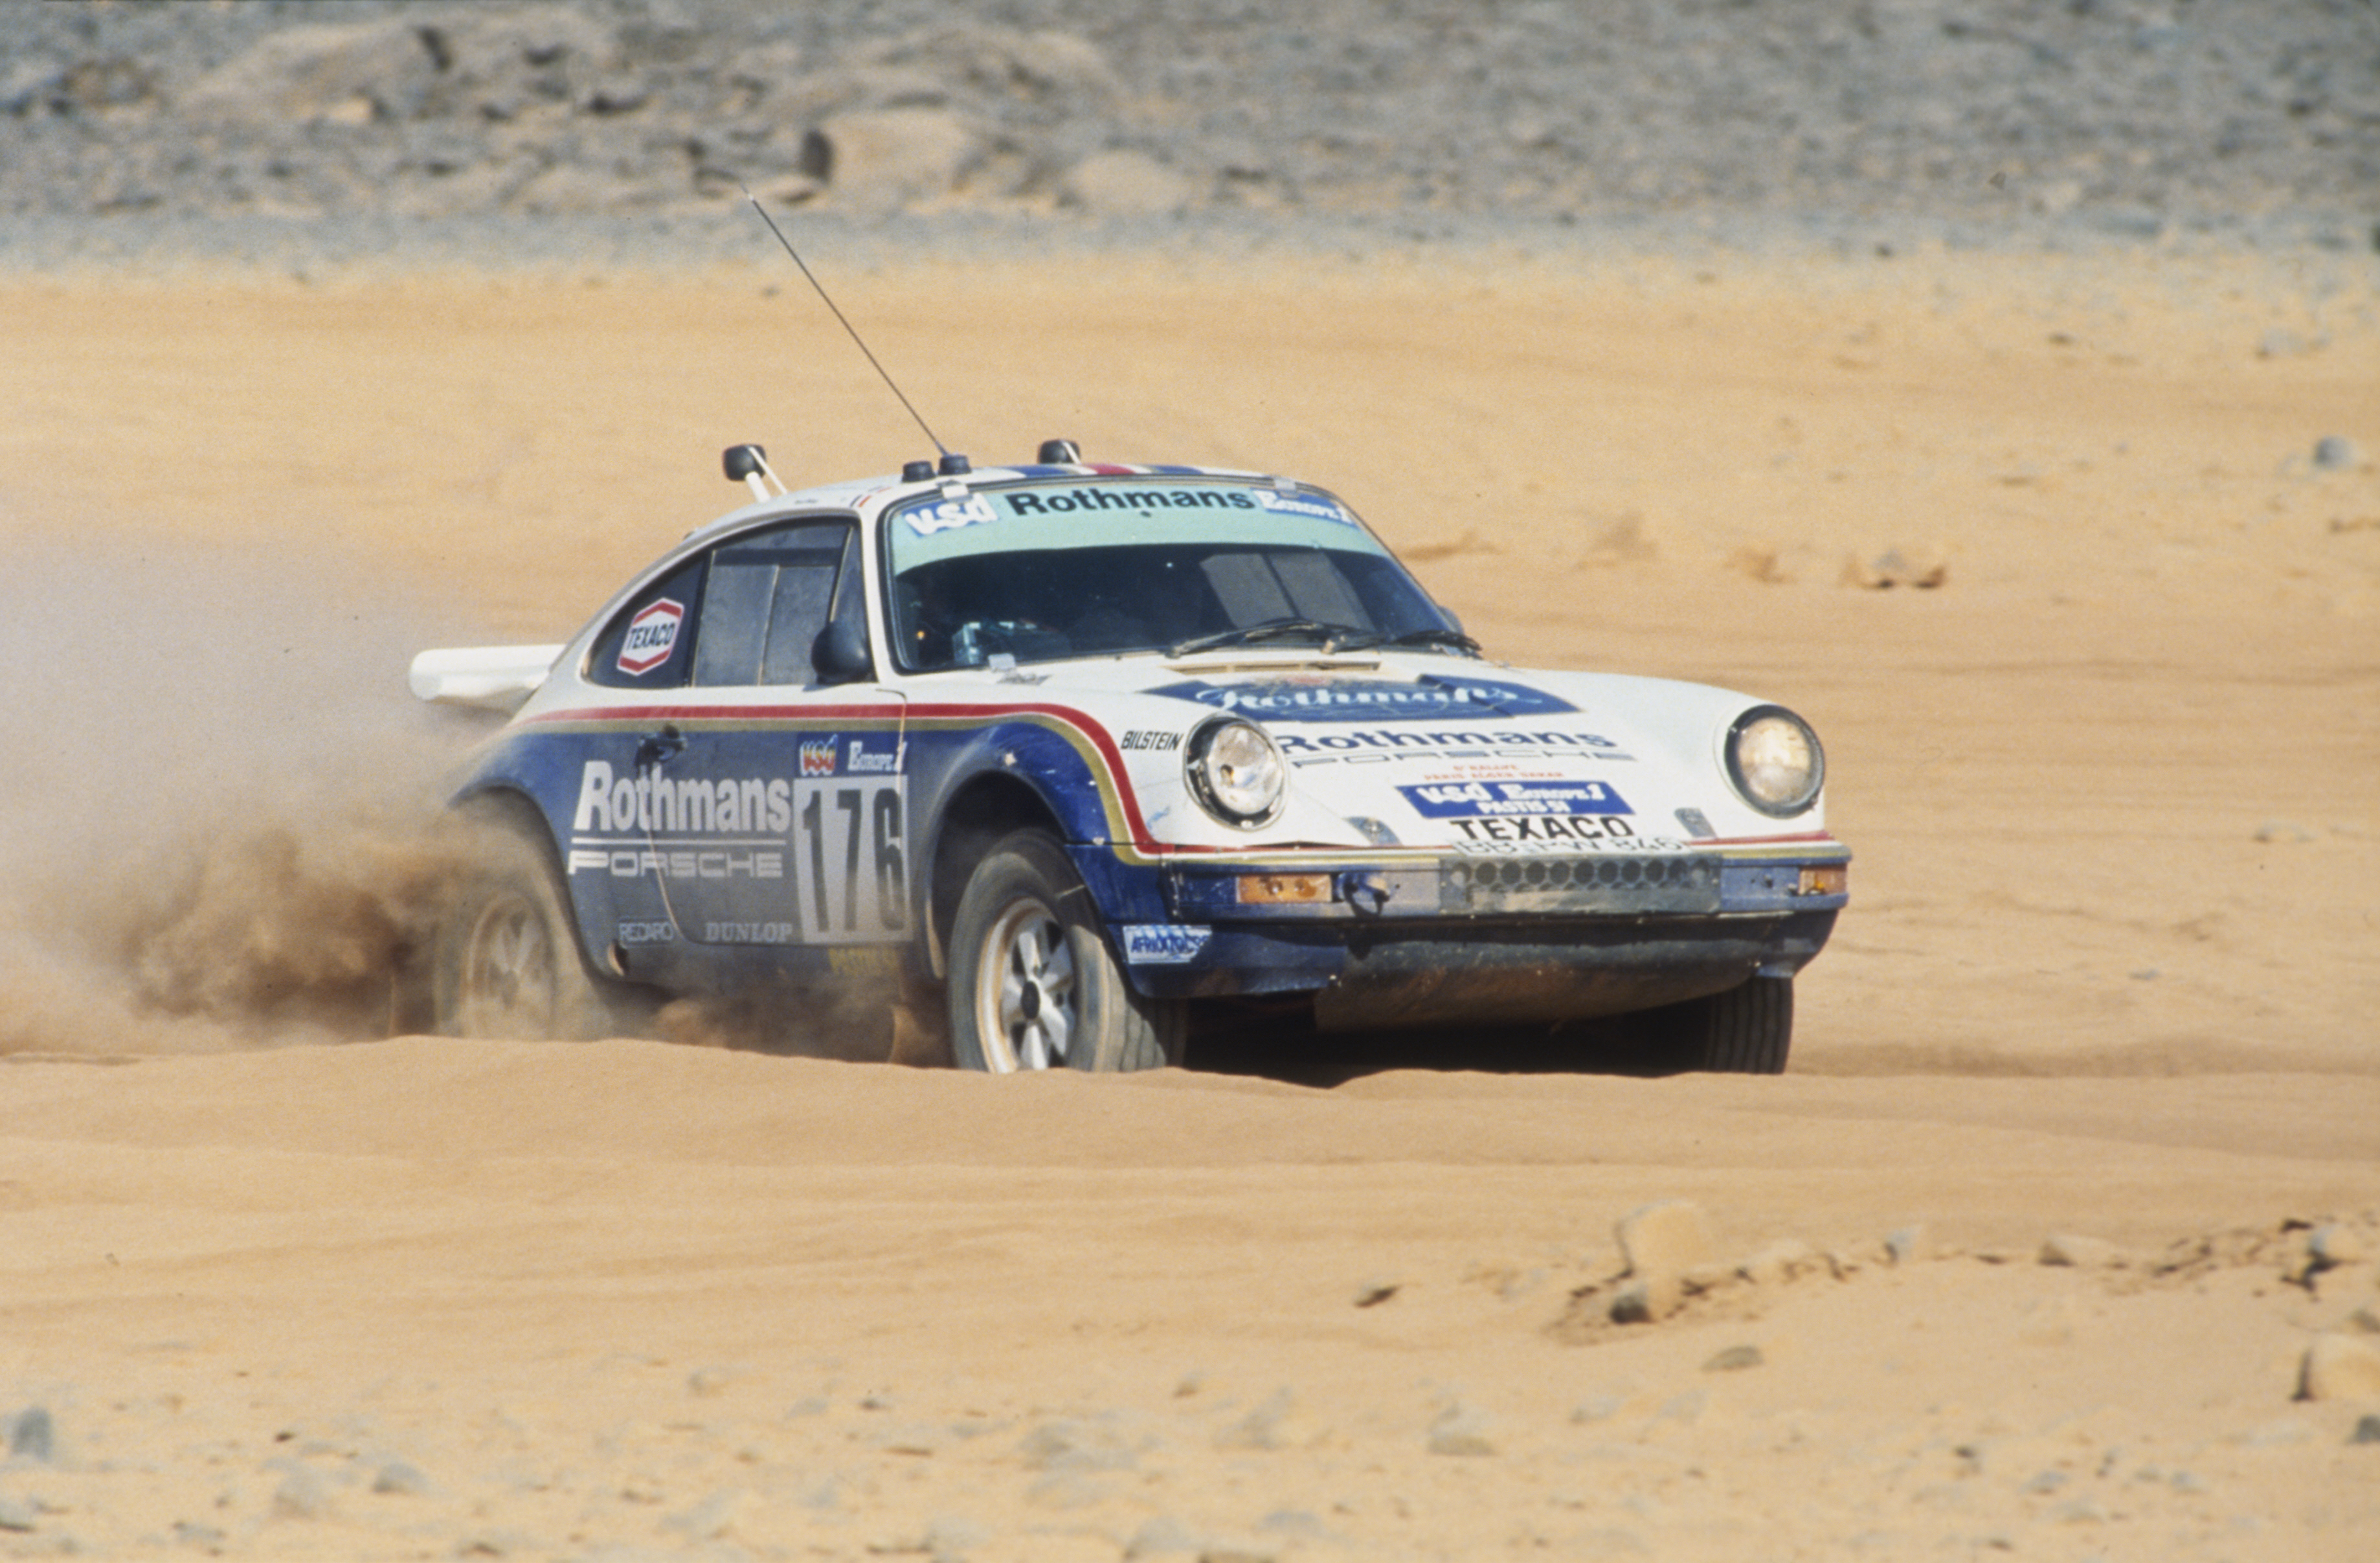 Porsche 953 driving through the desert